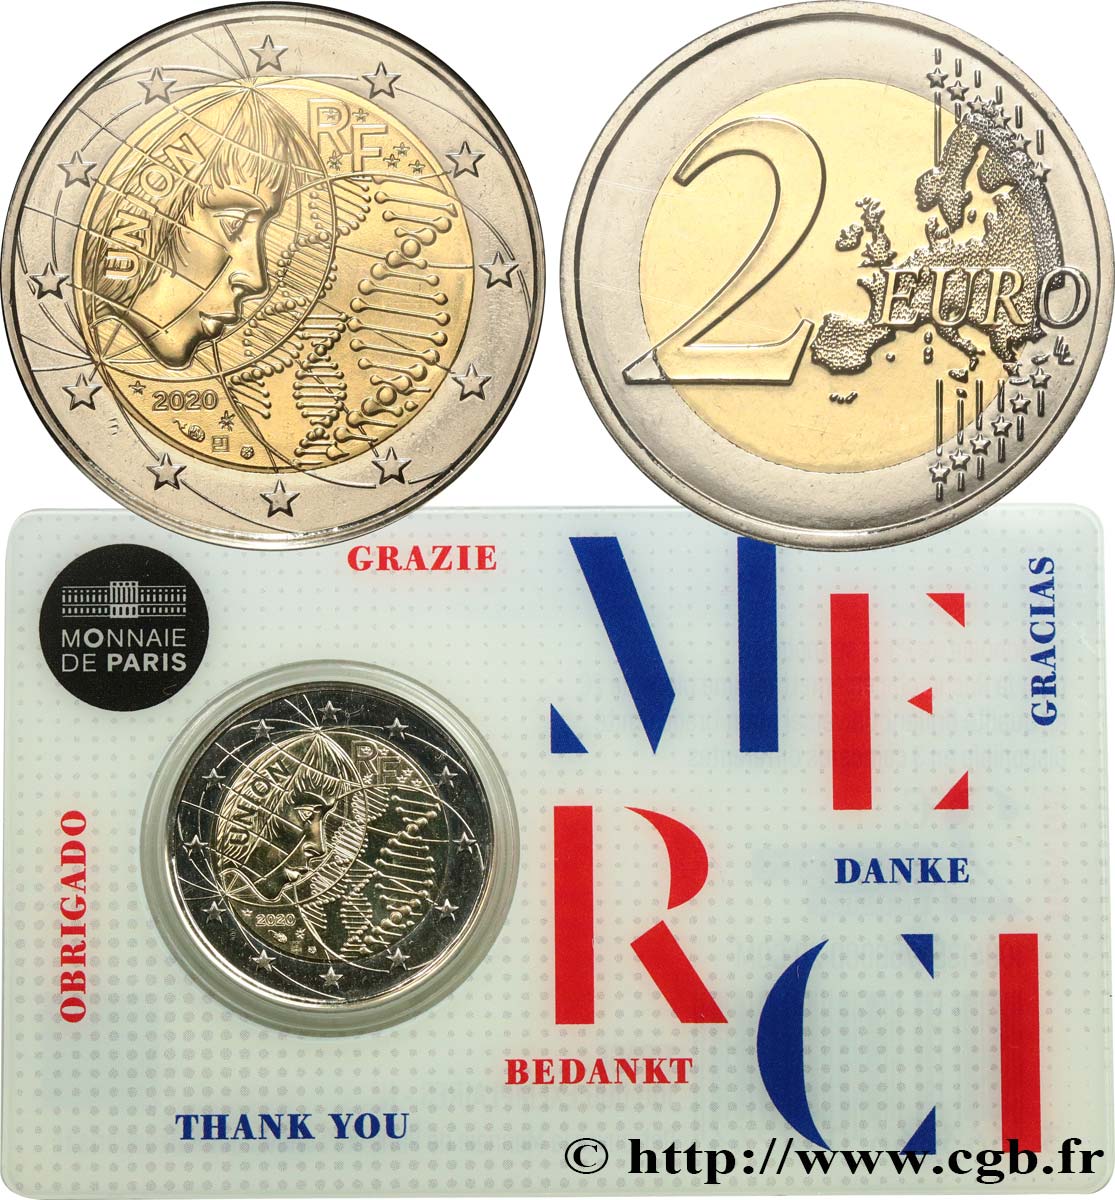 FRANCE Coin-Card 2 Euro RECHERCHE MÉDICALE - version MERCI 2020 Brilliant Uncirculated